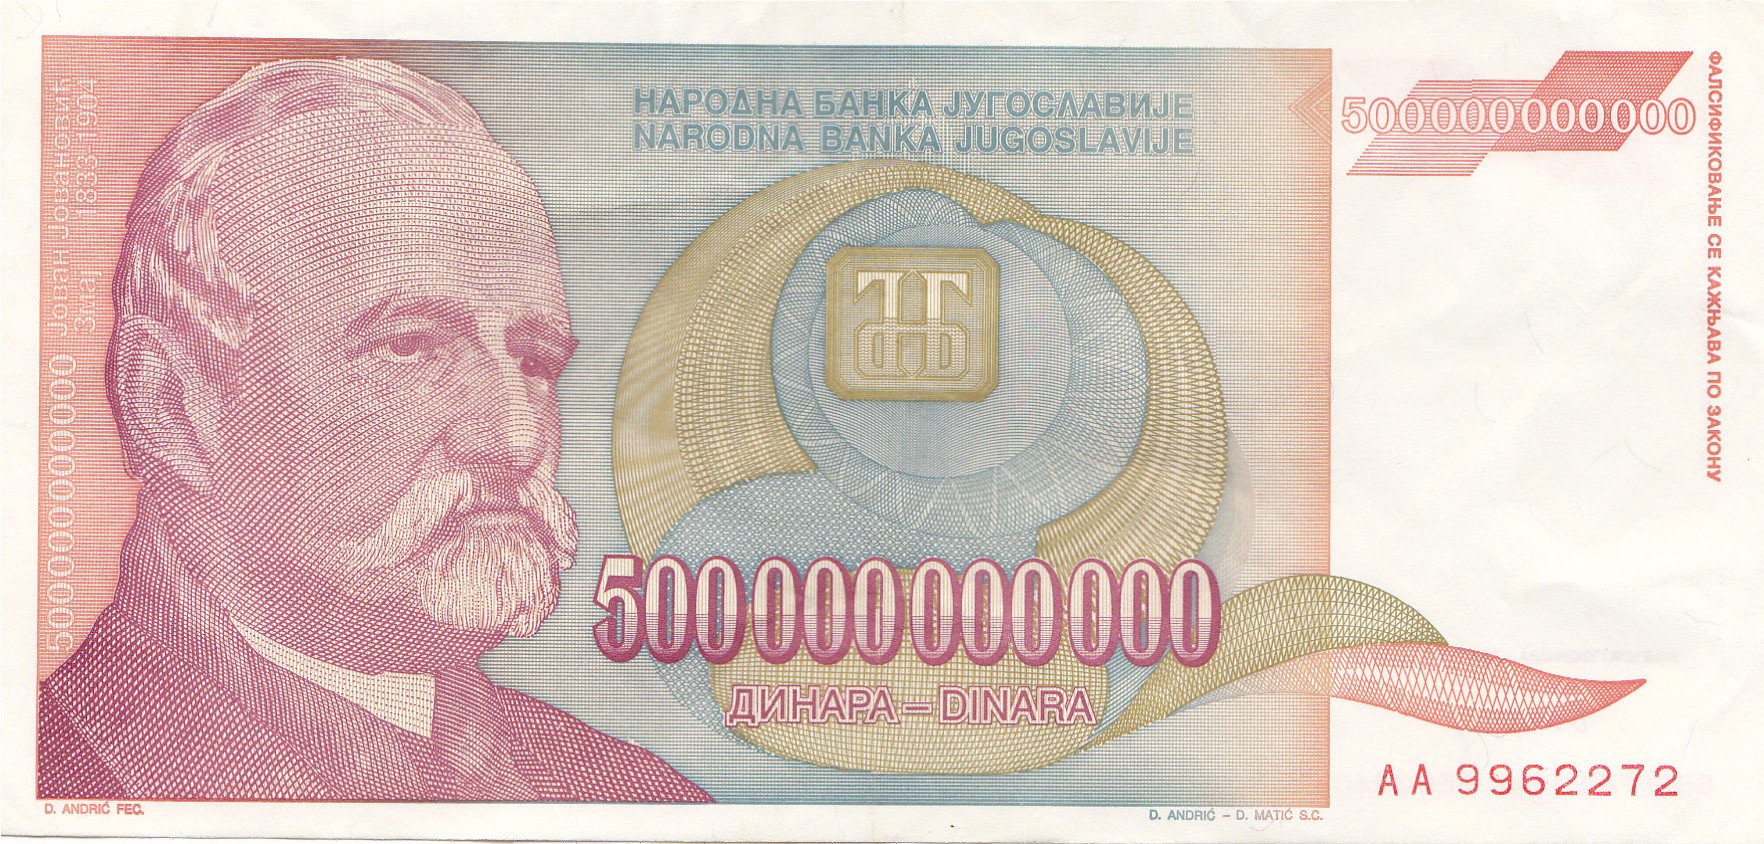 yugoslav-dinar-500-billion-front.jpeg